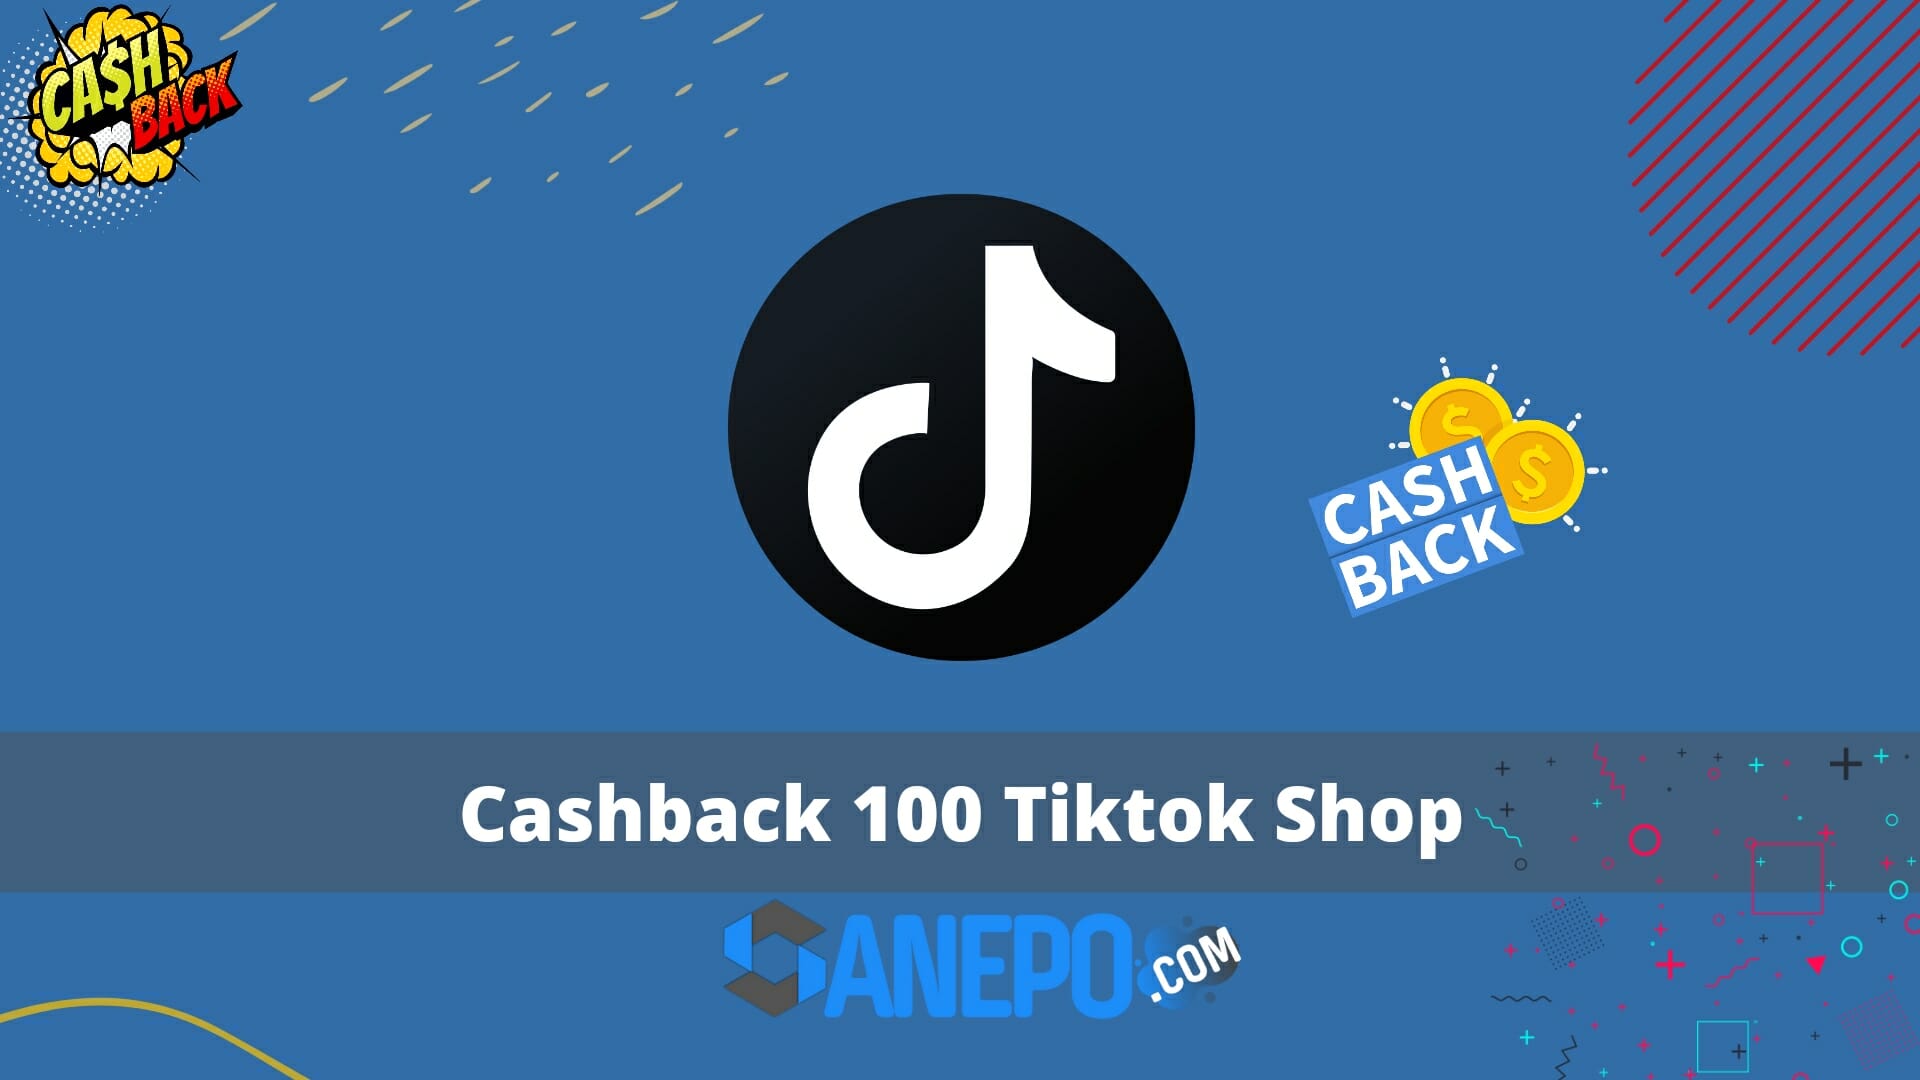 Cashback 100 Tiktok Shop